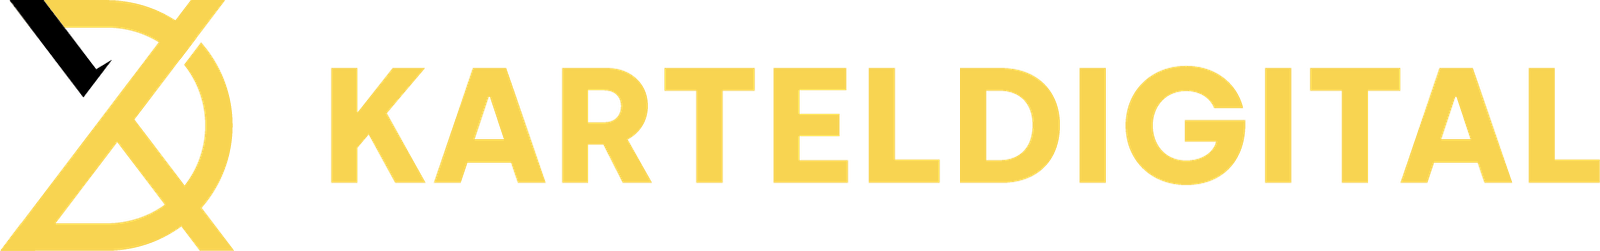 logo kartel digital new yellow